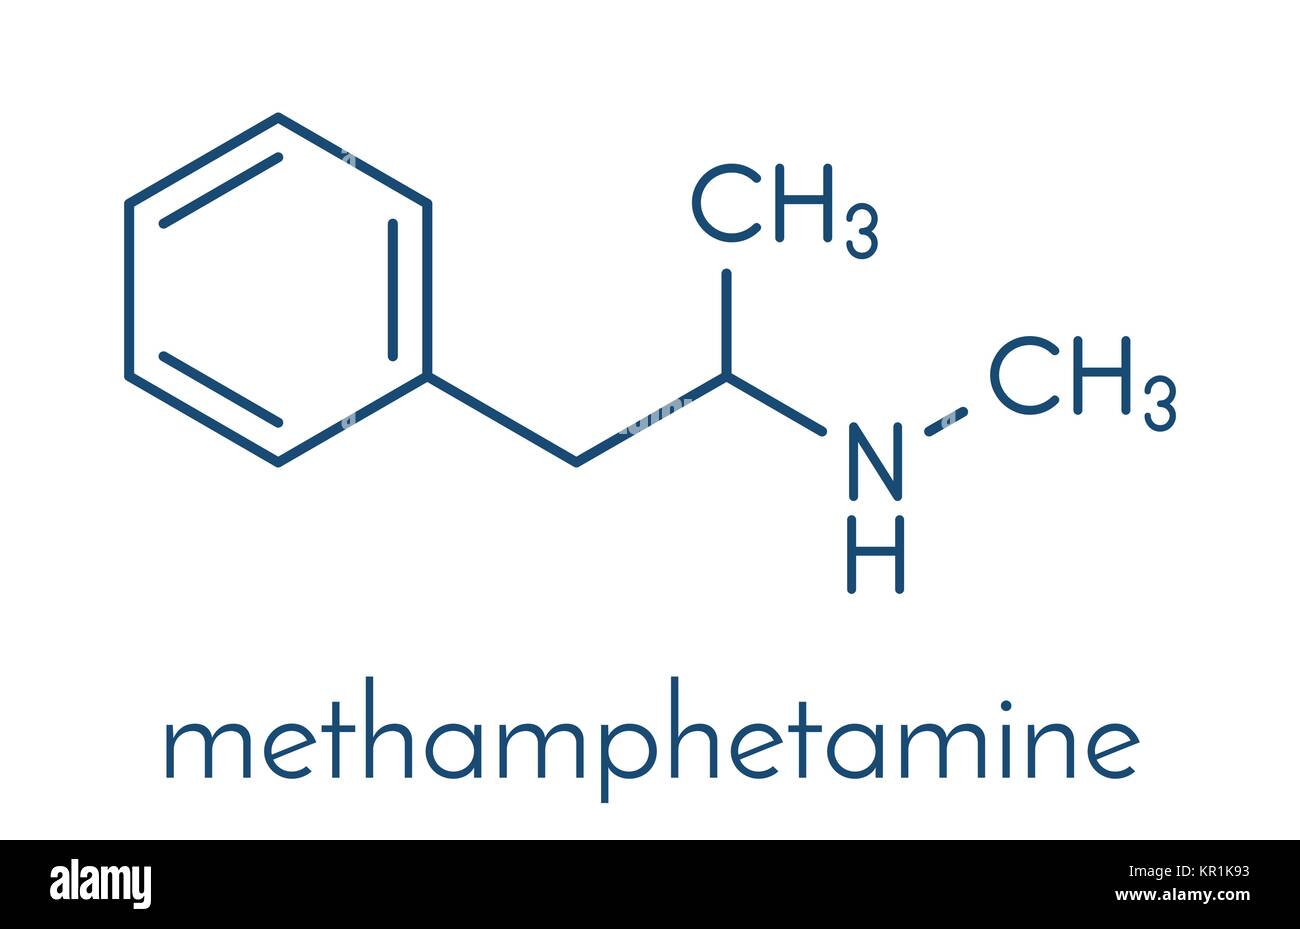 methamphetamine lewis structure